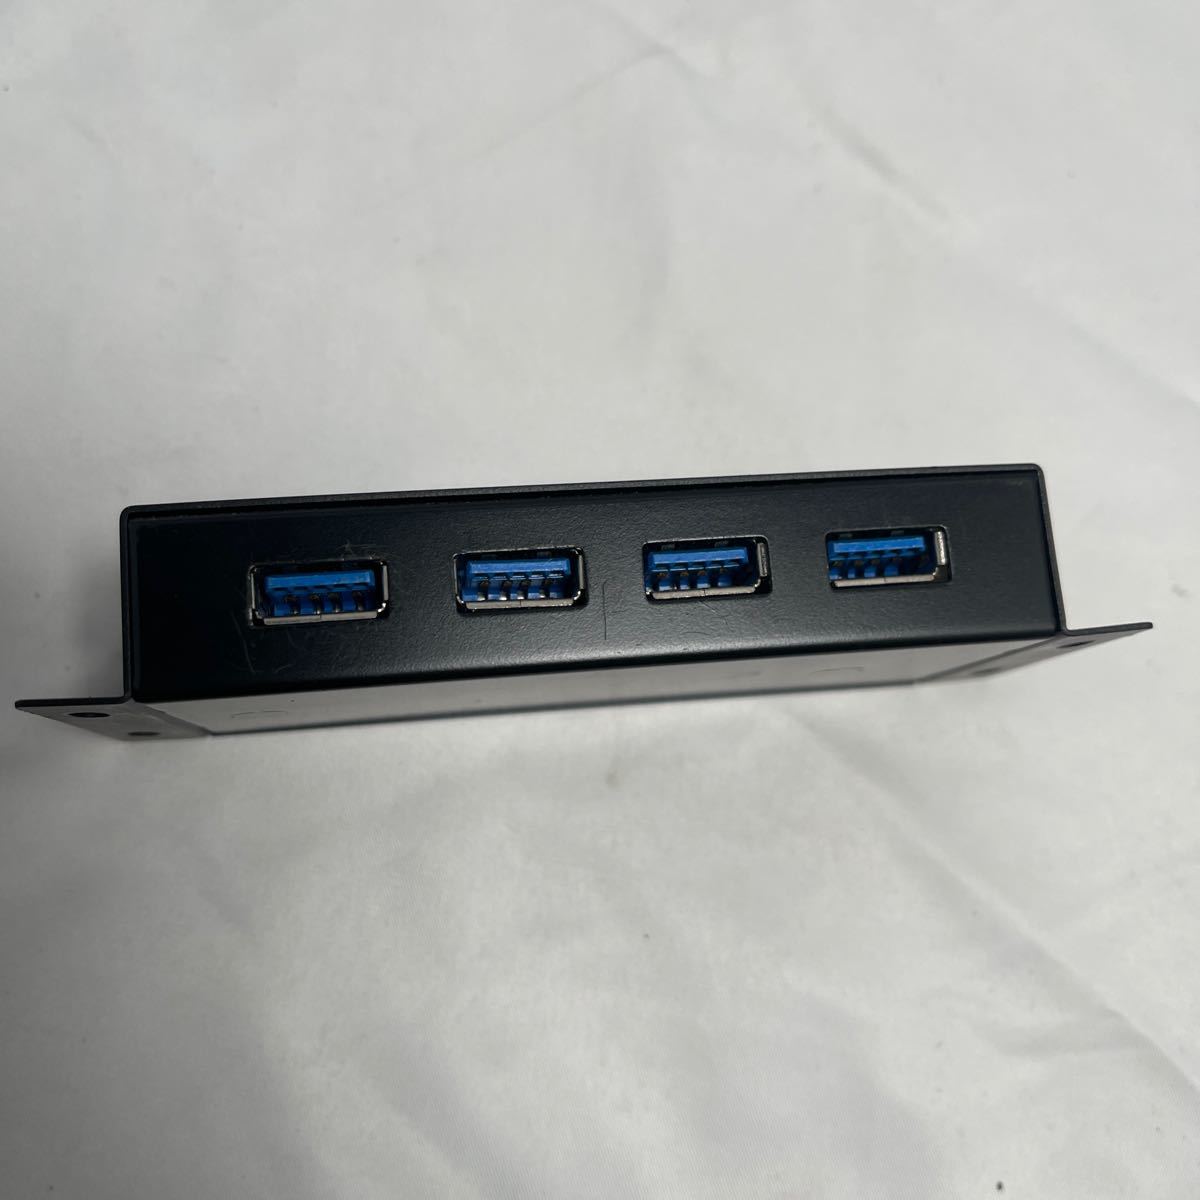 [T42_33N]USB4 port hub USB3.0 operation goods power supply adaptor less 